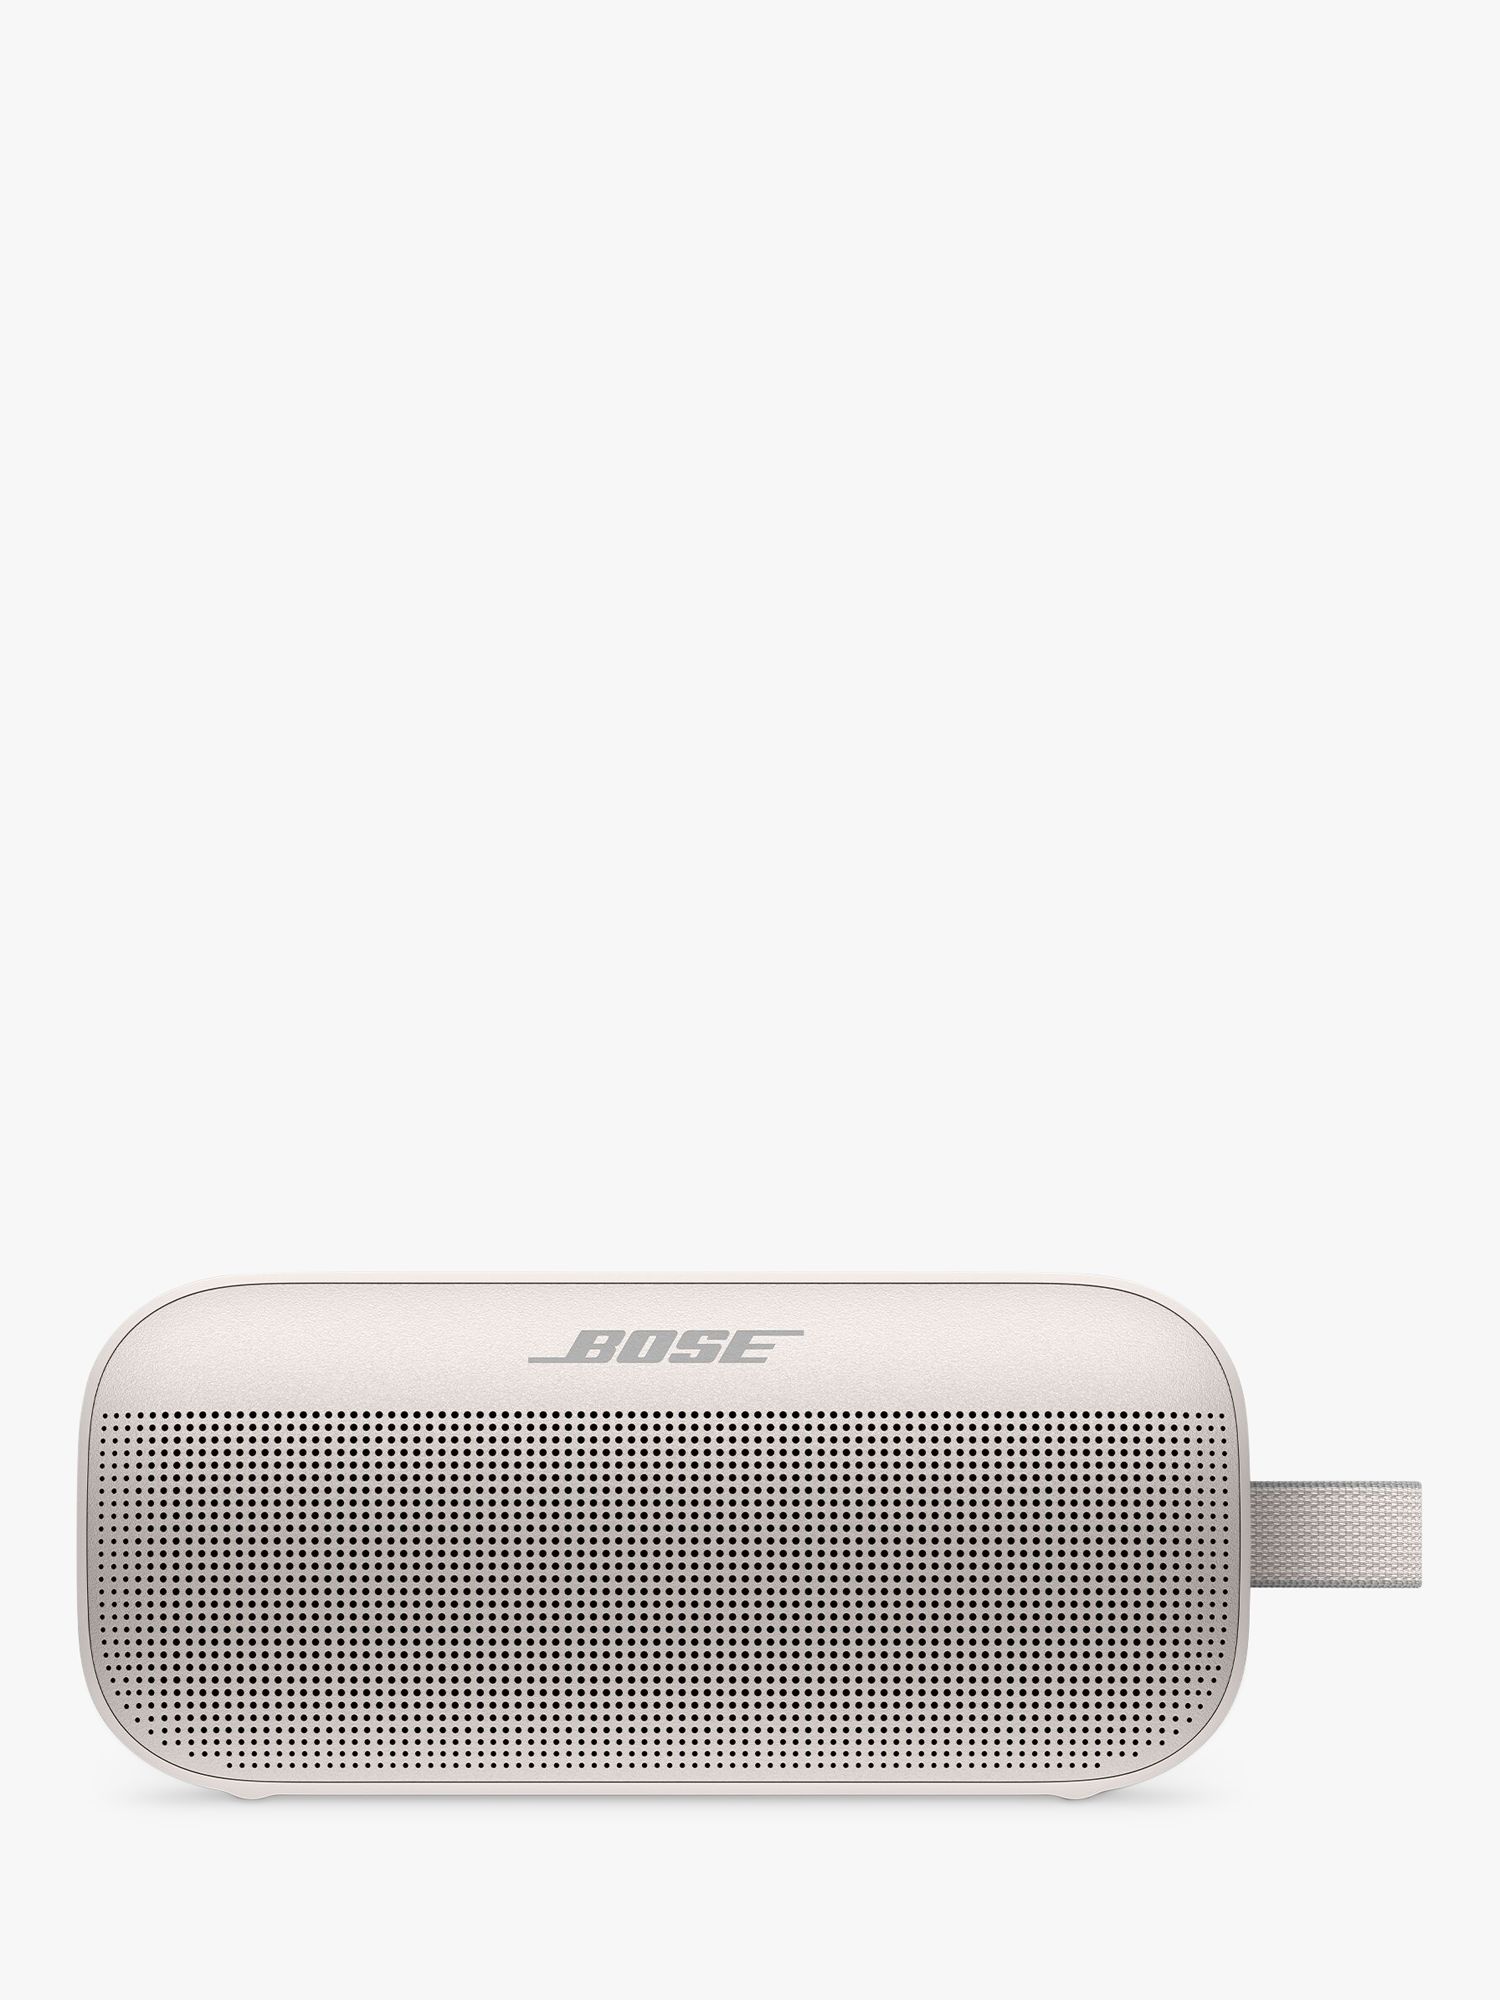 Bose SoundLink Color Waterproof Portable Bluetooth Speaker, White 